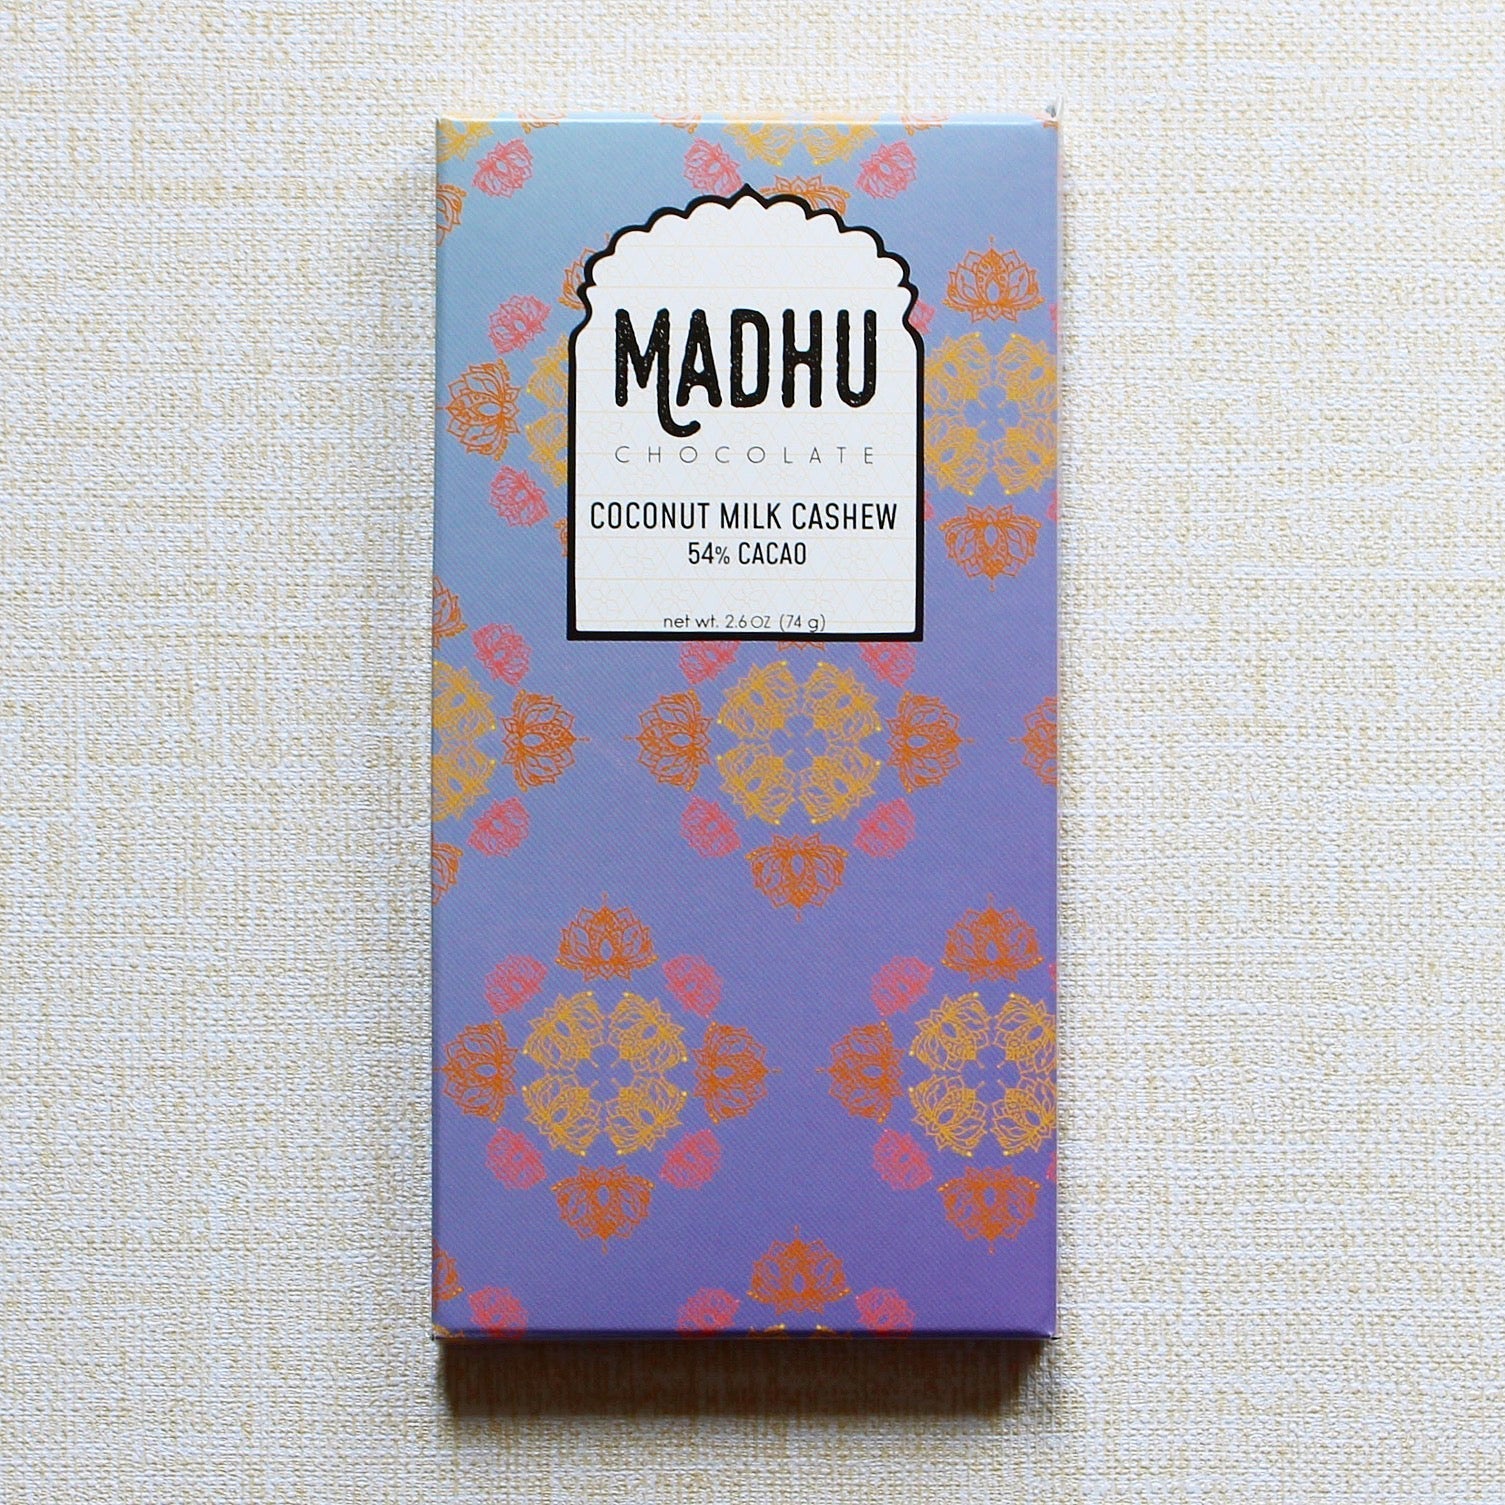 Madhu Chocolate Coconut Milk Cashew - 54% Cacao